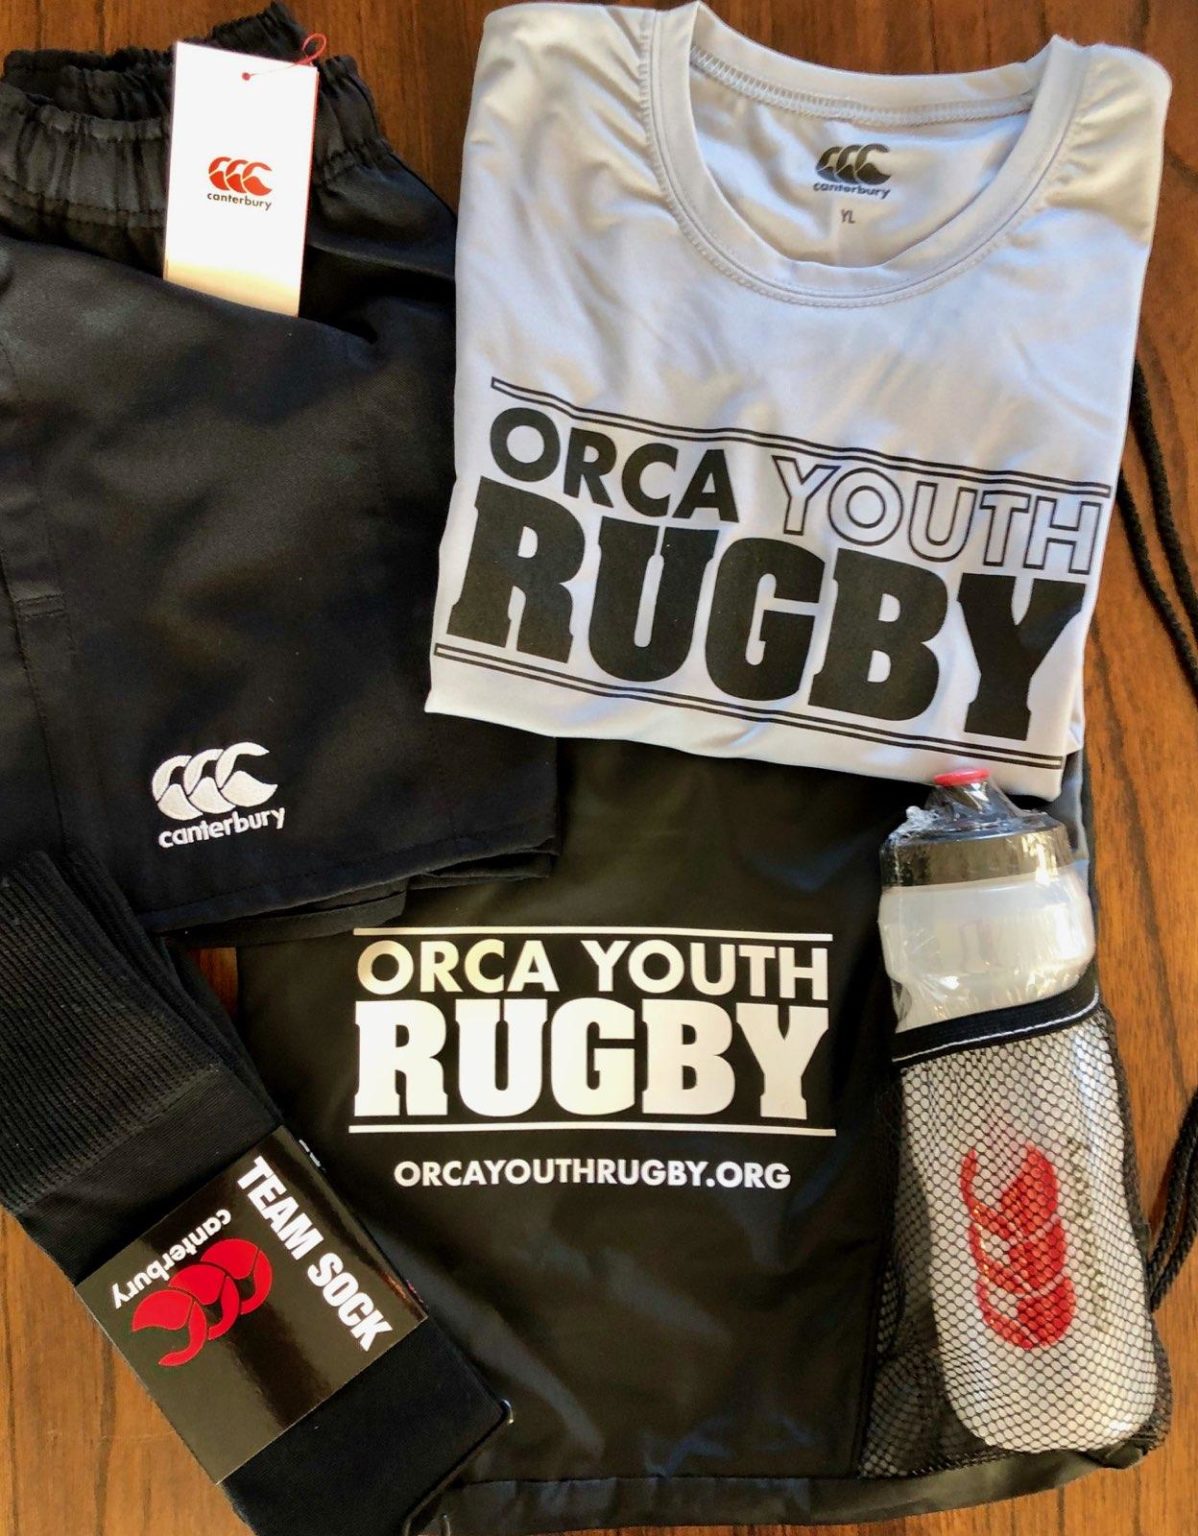 Registration - Orca Youth Rugby Club